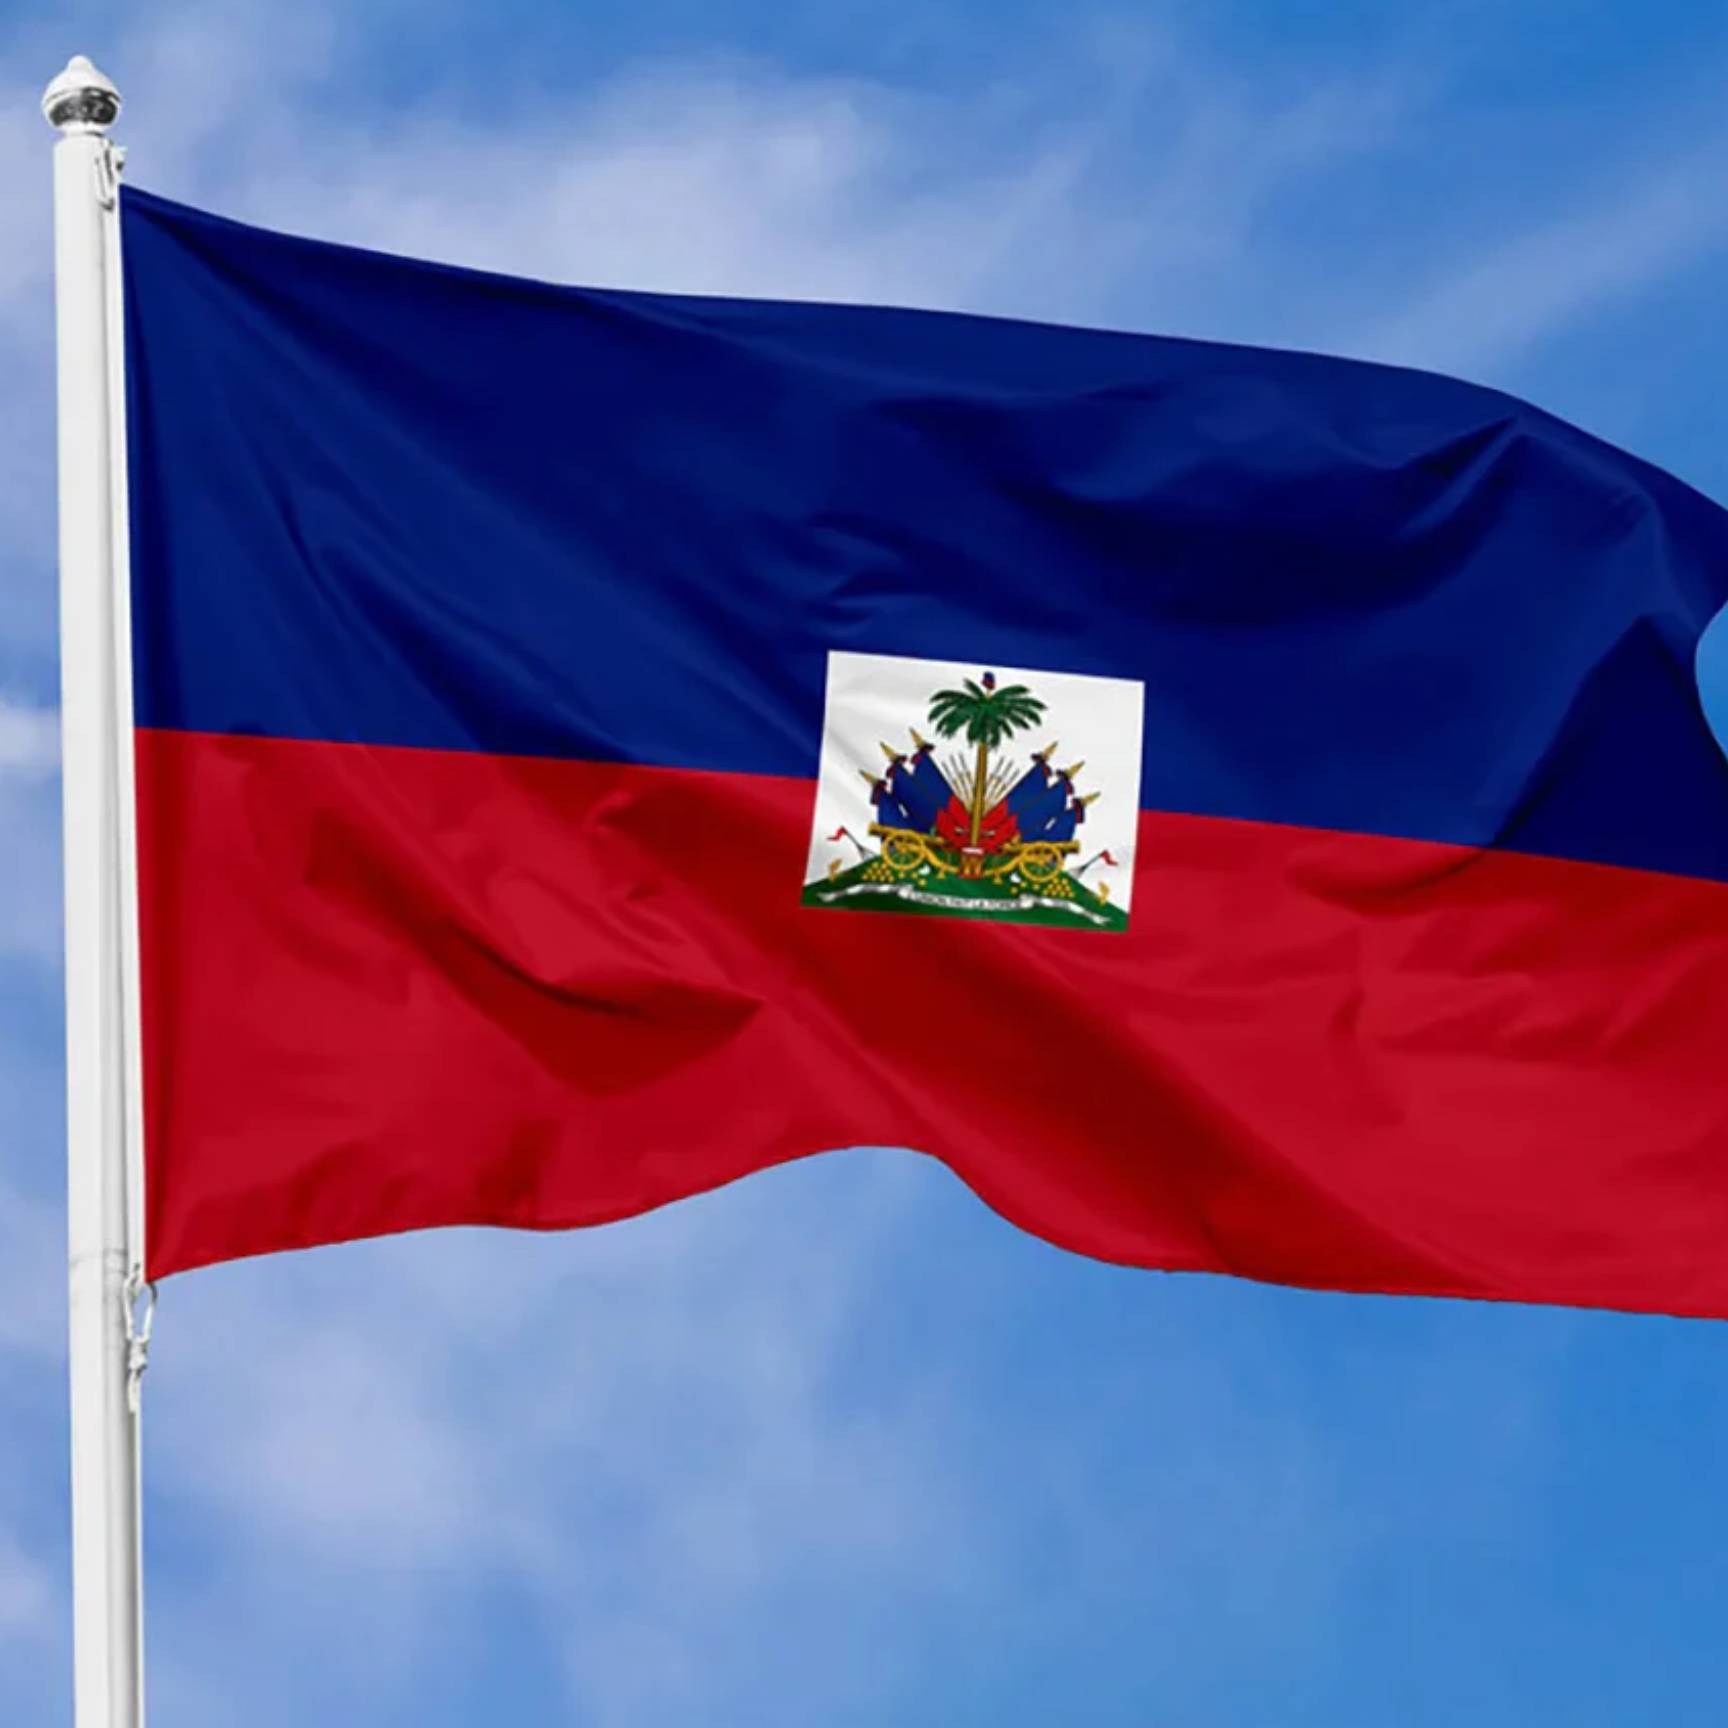 Haiti National Flag 90x150cm High Quality 100% Polyester Double Side Printed Haiti